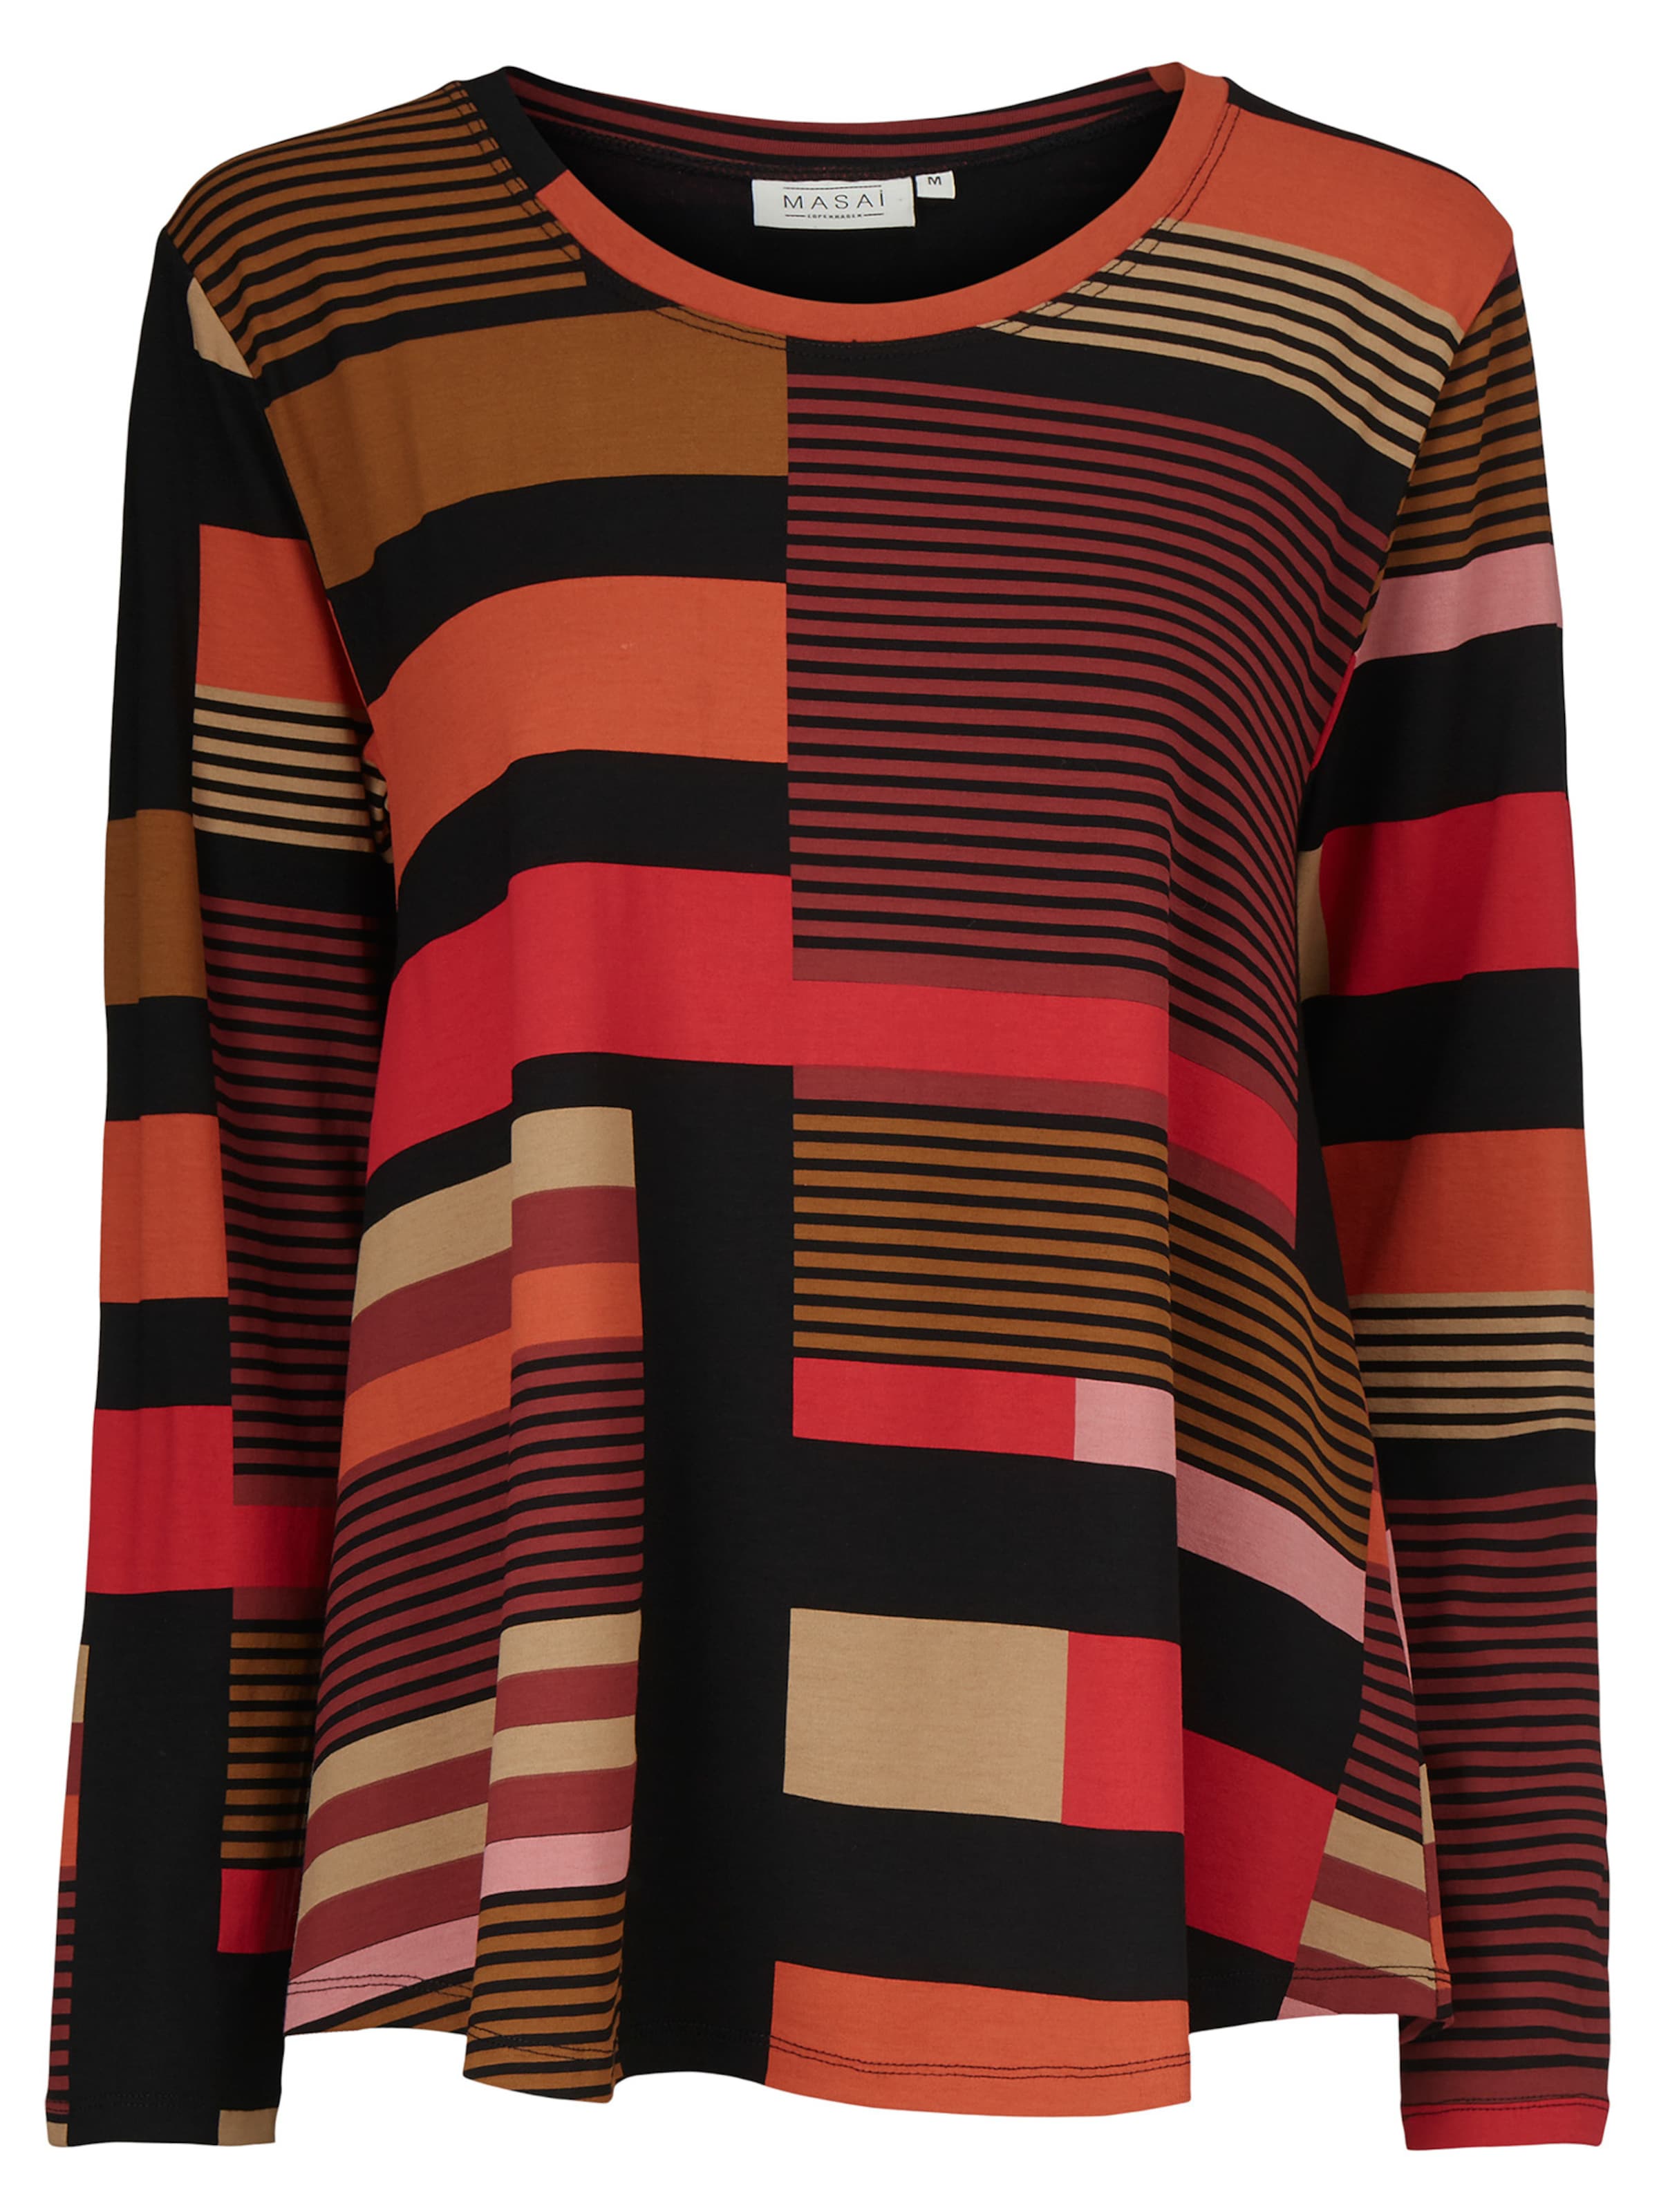 Frauen Shirts & Tops Masai Shirt 'Badisna' in Mischfarben, Rot - DL24236